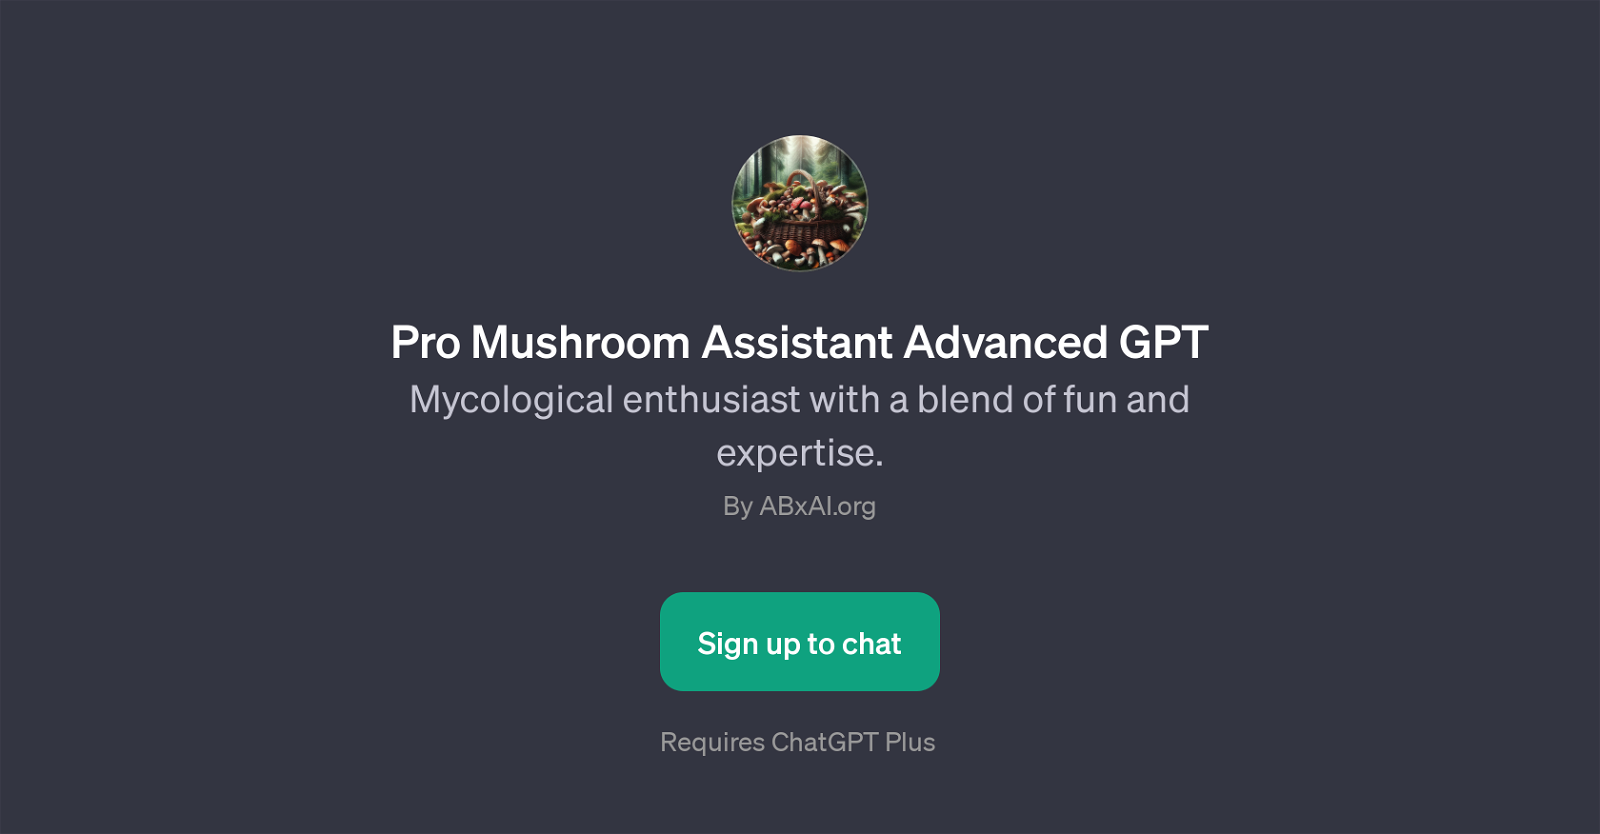 Pro Mushroom Assistant Advanced GPT website